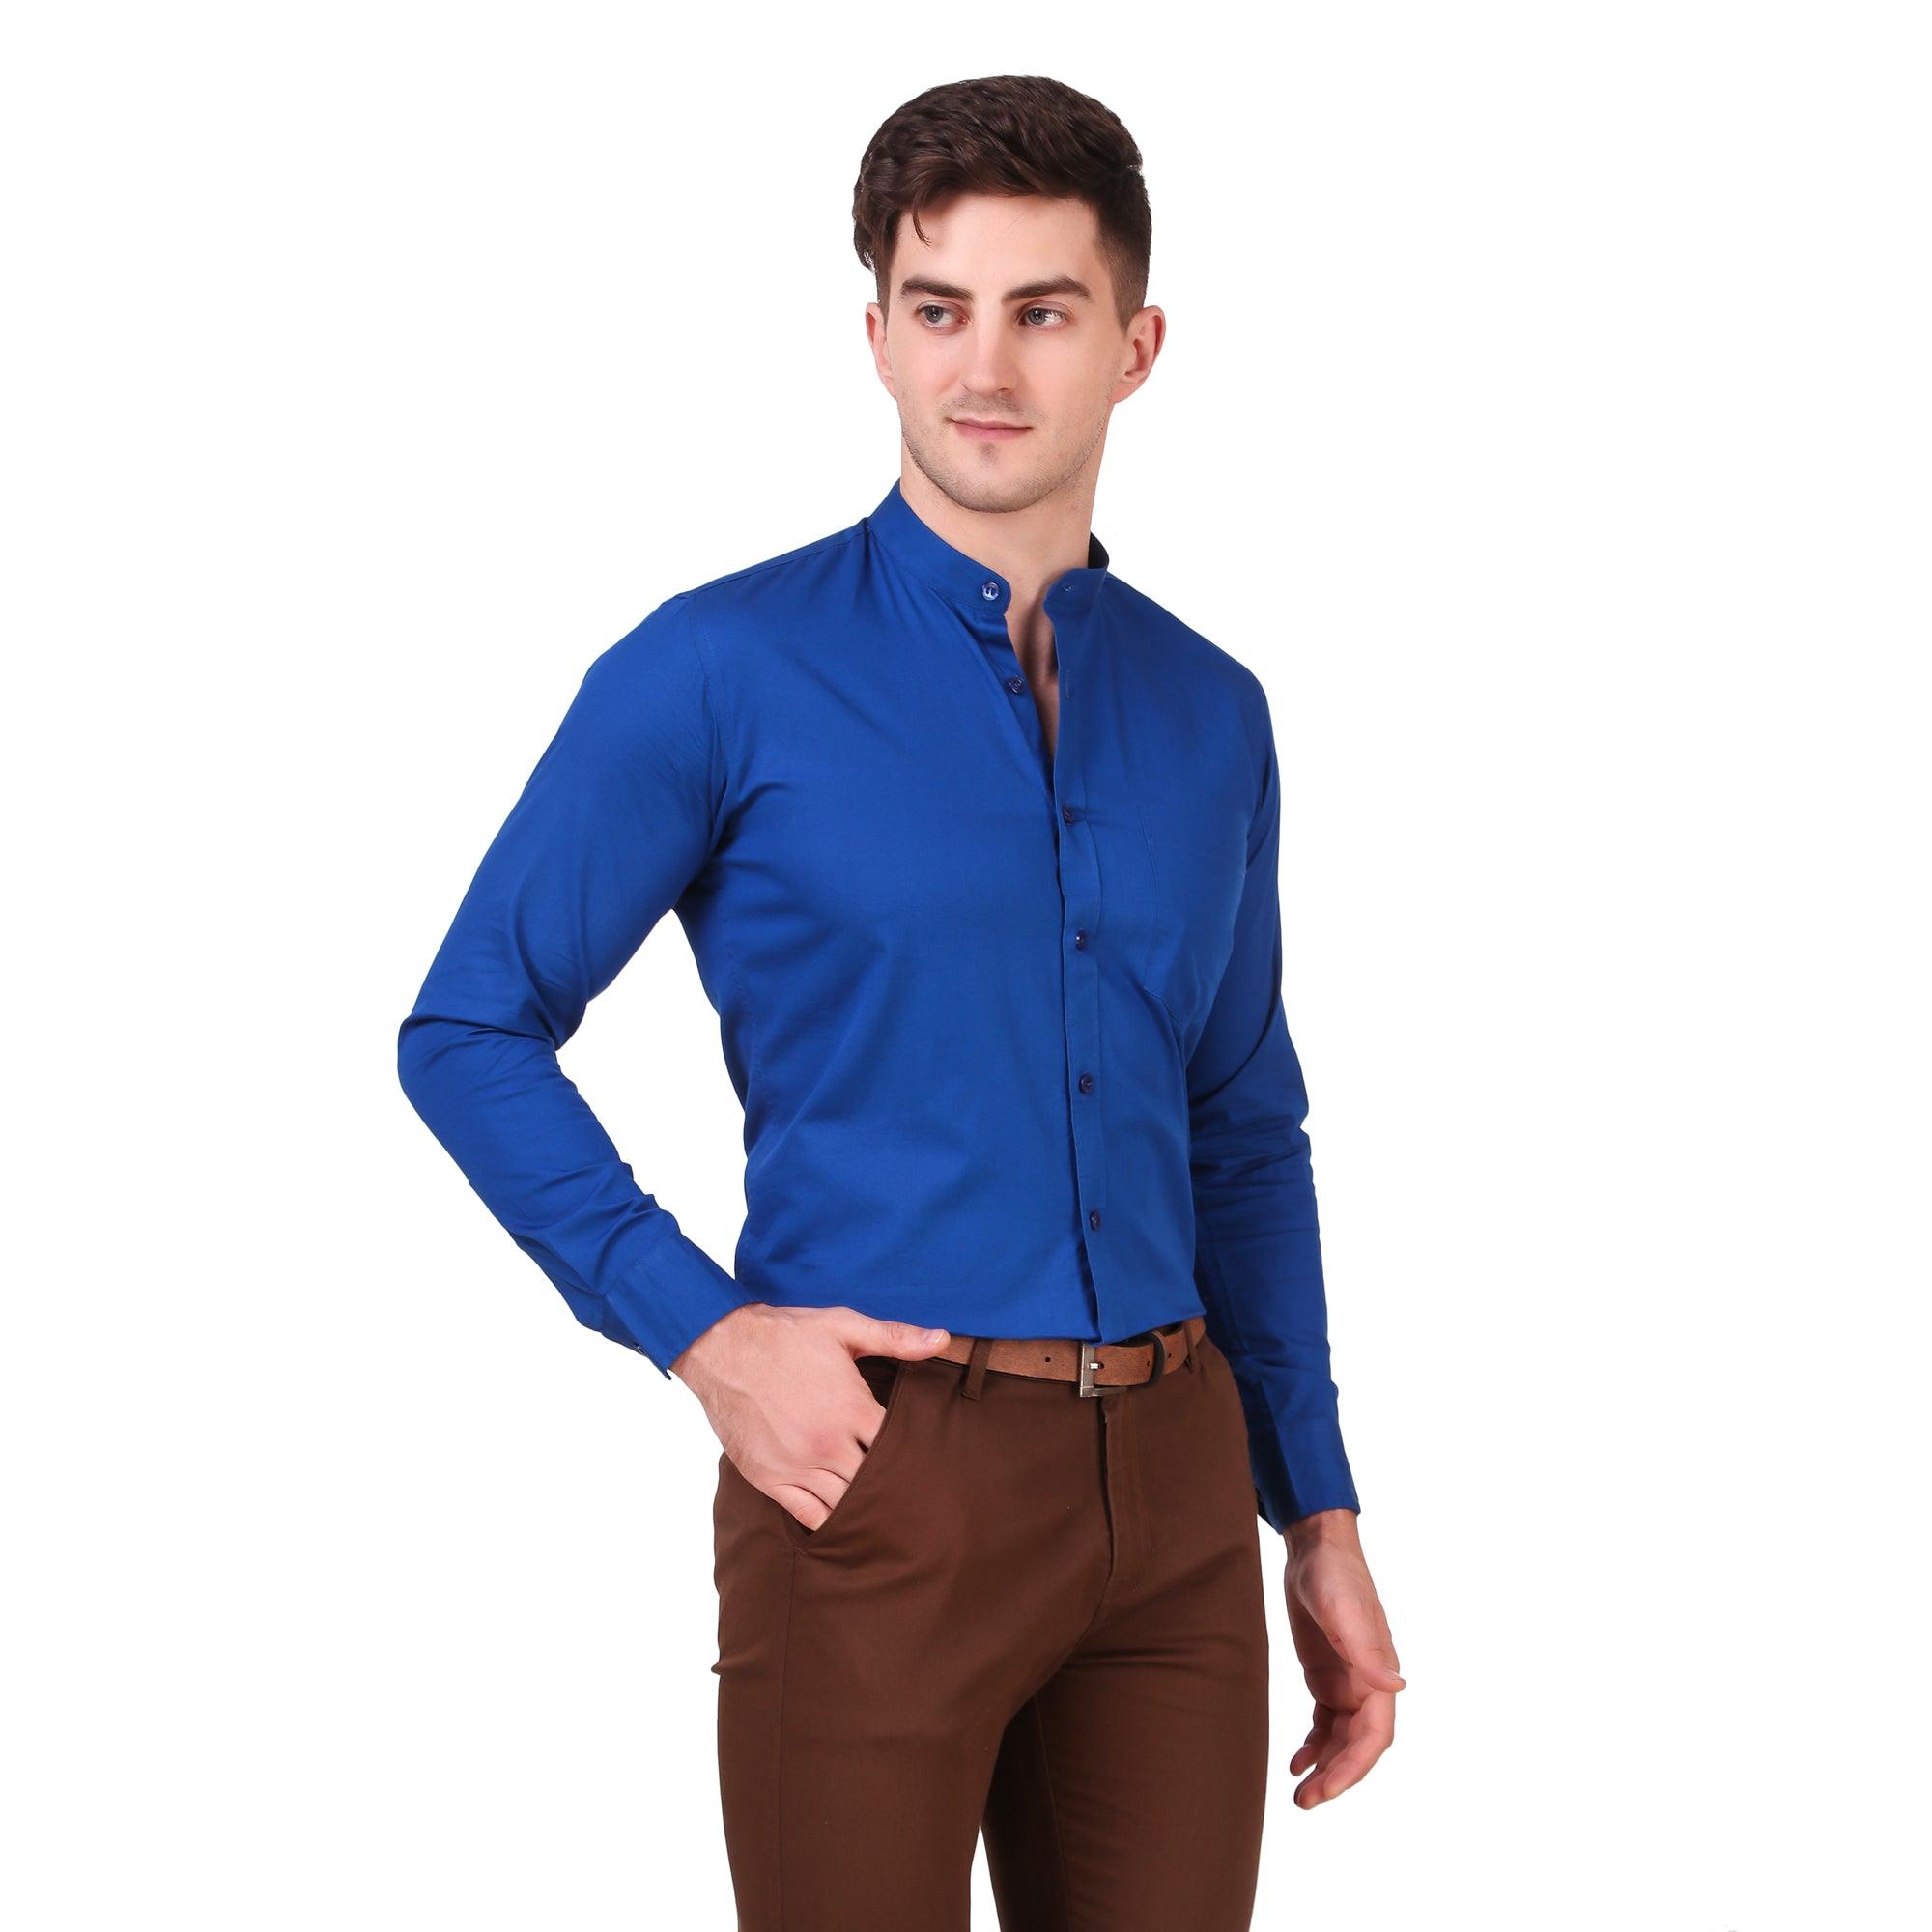 Blue Color 100% Cotton Nehru Collar Shirt - The Fineworld